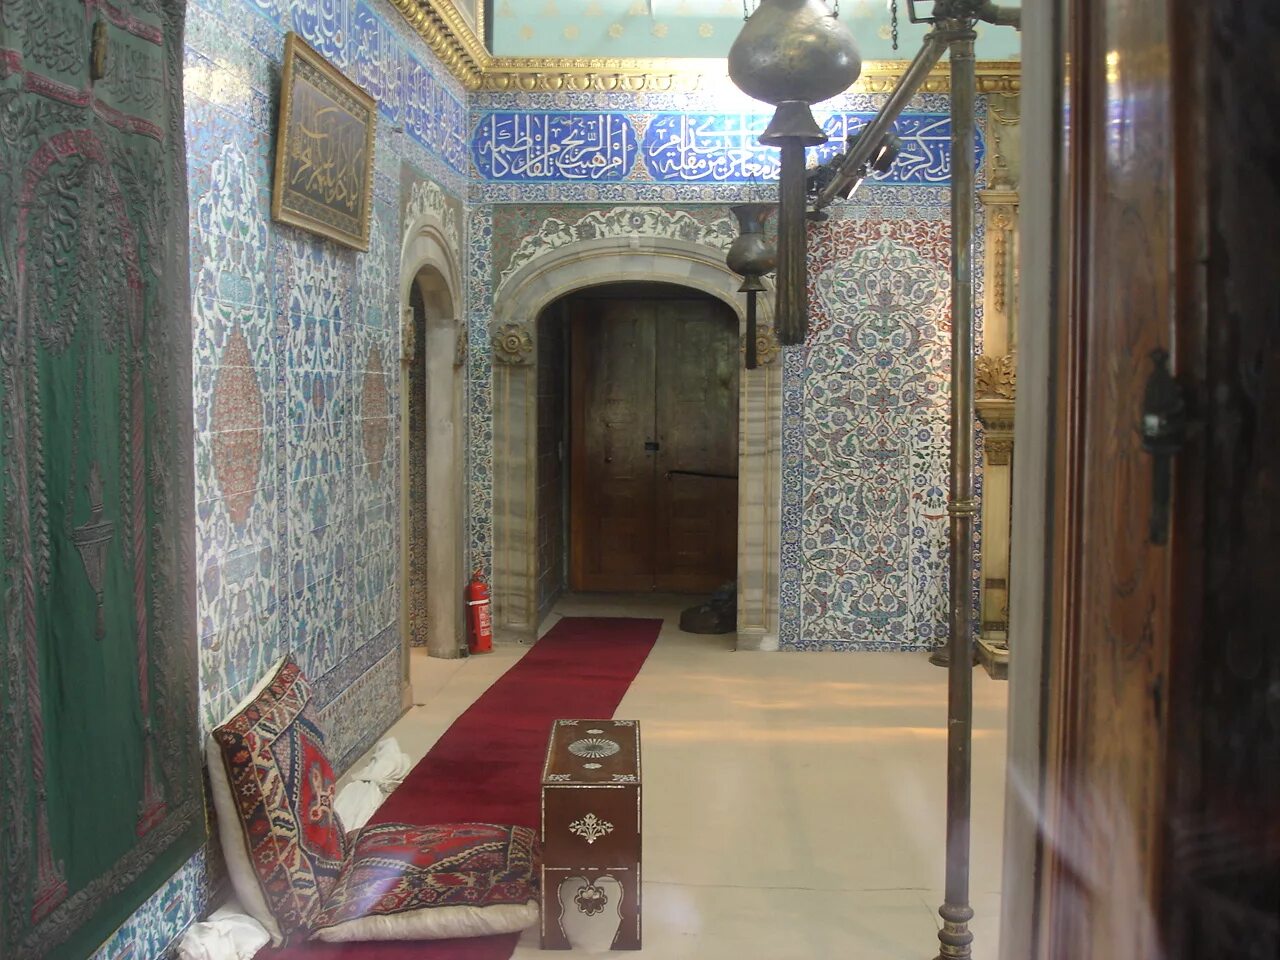 Где жили султаны. Дворец Султана Сулеймана Топкапы гарем. Музей дворца Топкапы. Музей Топкапы в Стамбуле. Дворец Топкапы в Стамбуле комната Султана.